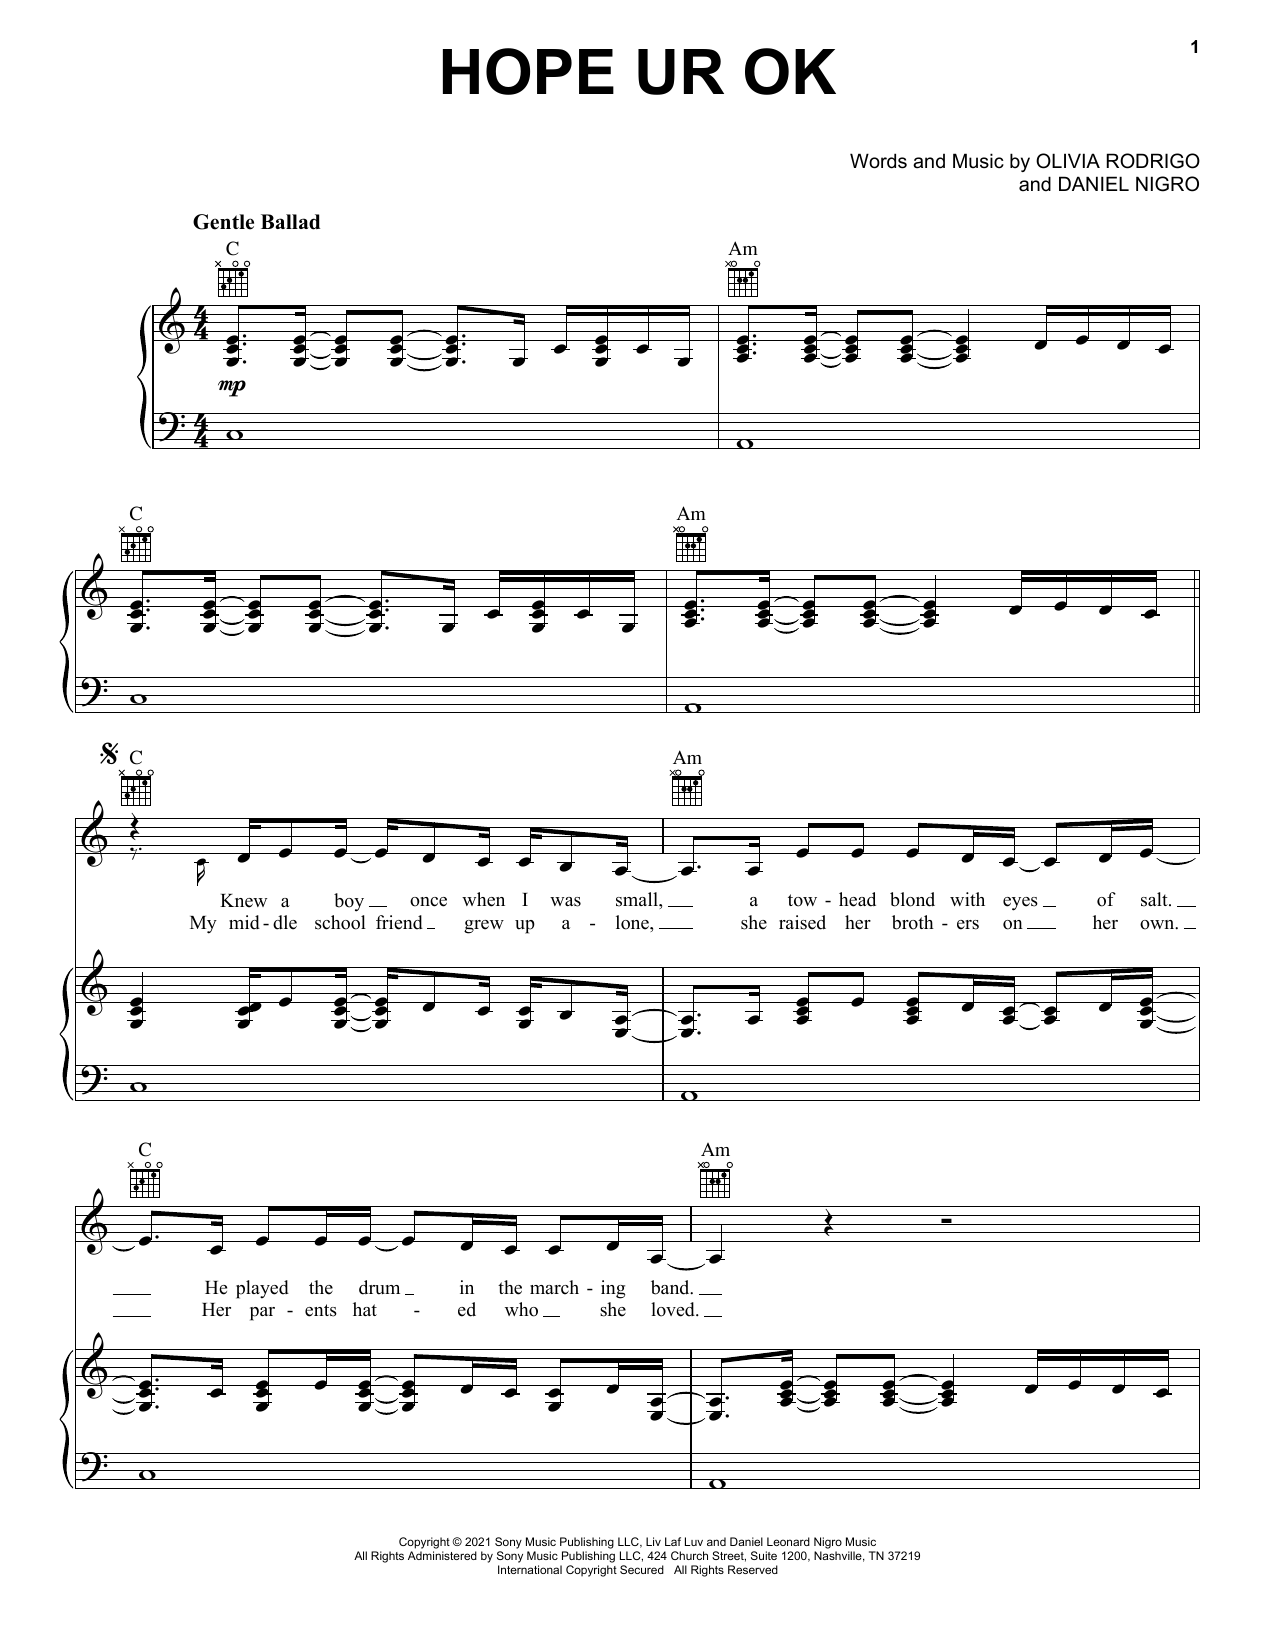 Olivia Rodrigo hope ur ok Sheet Music Notes & Chords for Easy Piano - Download or Print PDF